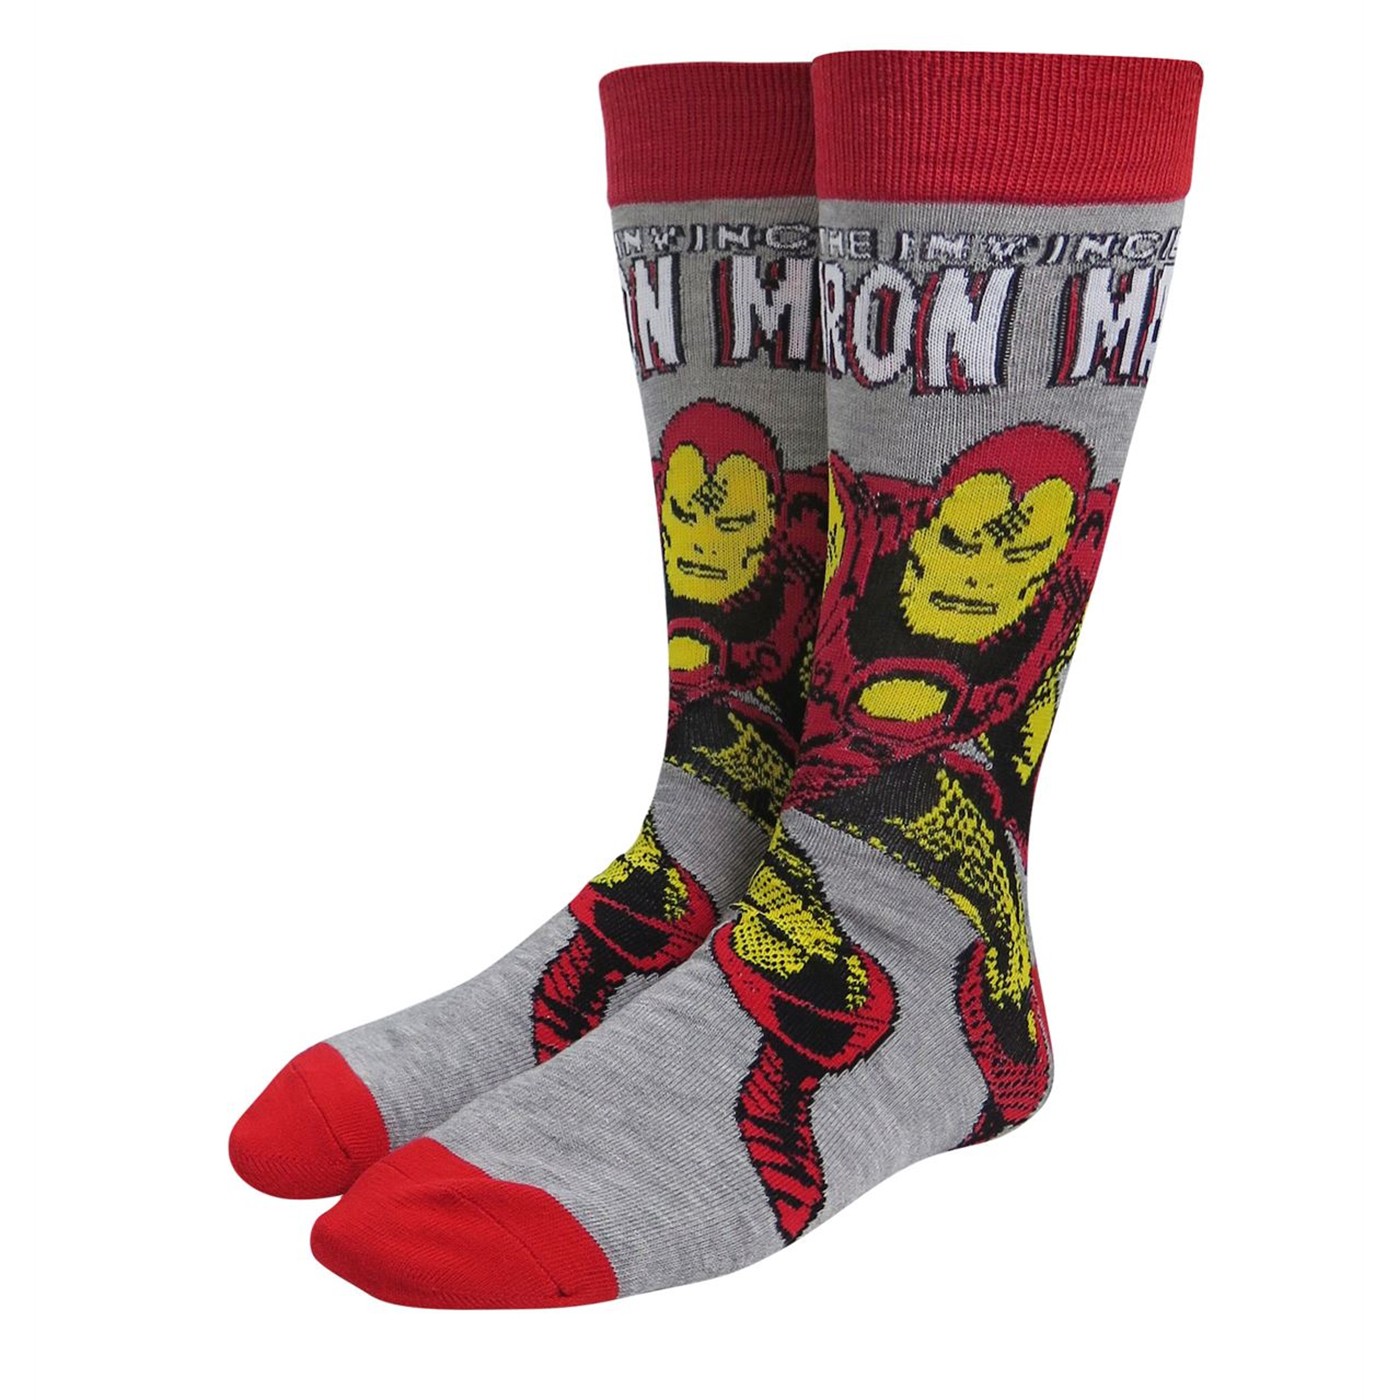 The Invincible Iron Man Crew Socks 2-Pack